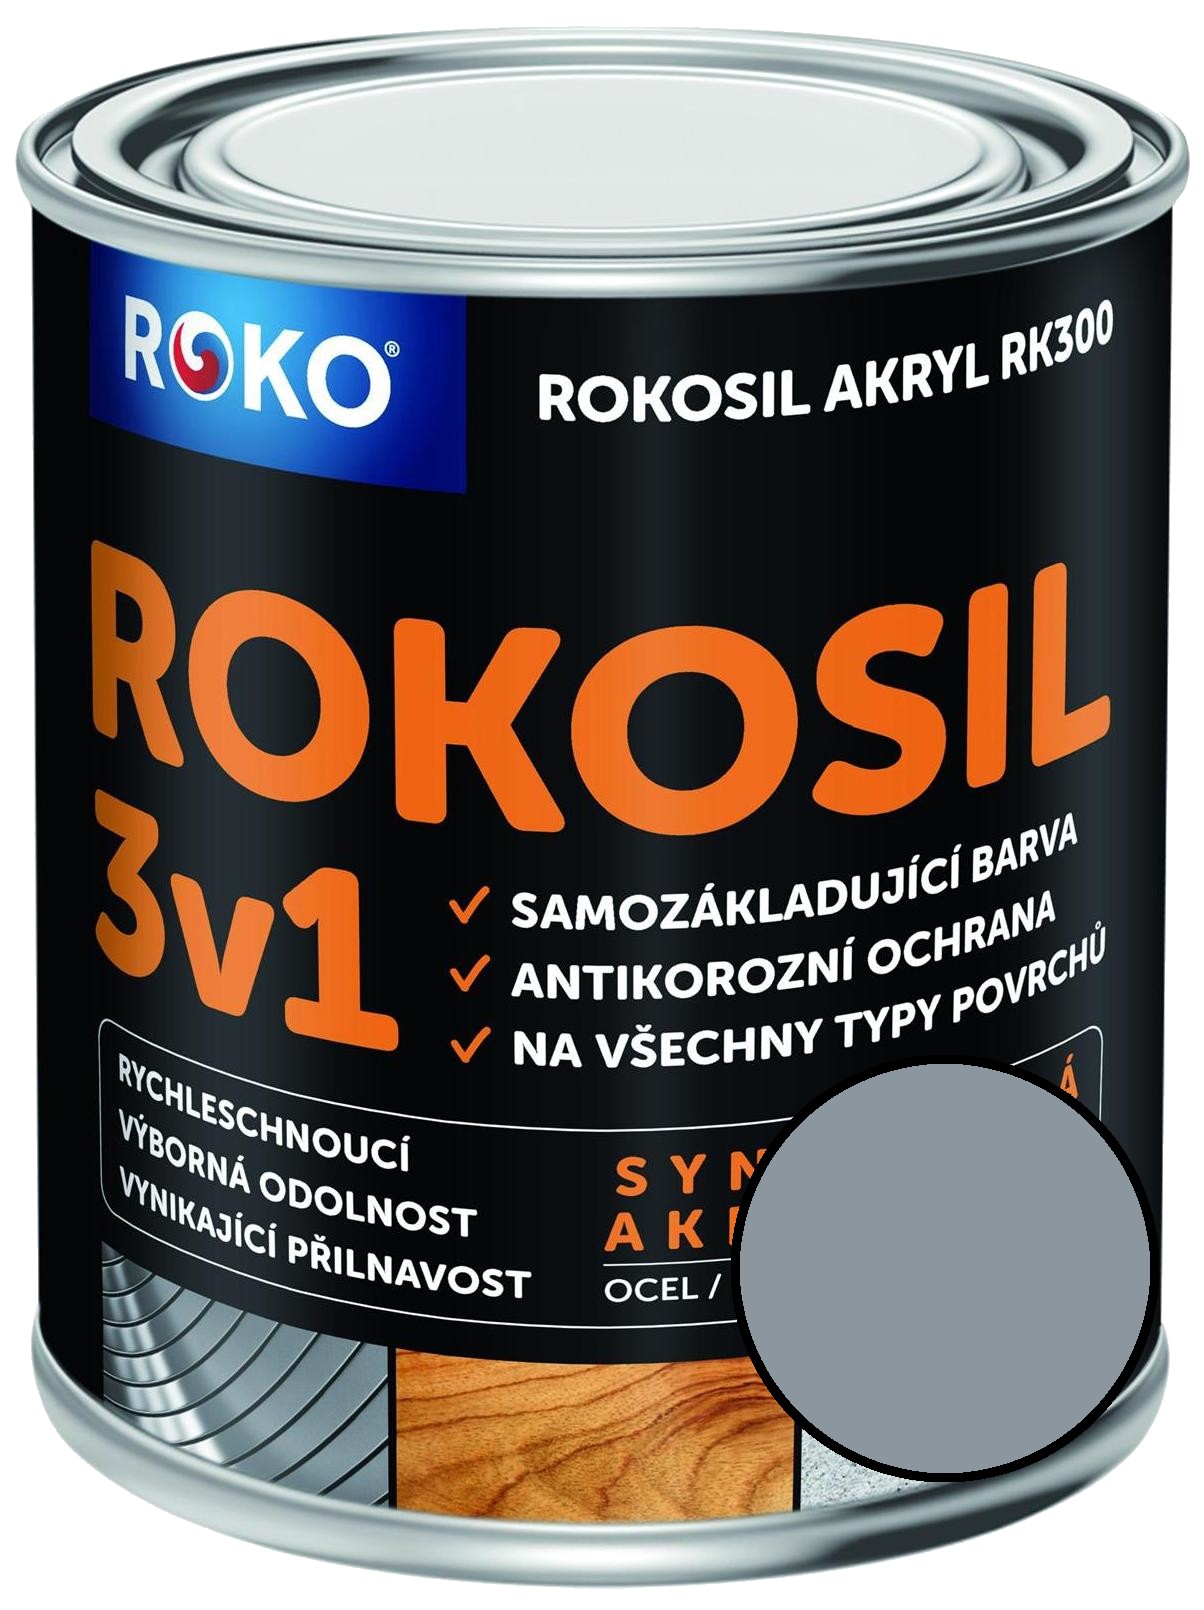 Barva samozákladující Rokosil akryl 3v1 RK 300 1010 šedá pastelová, 0,6 l